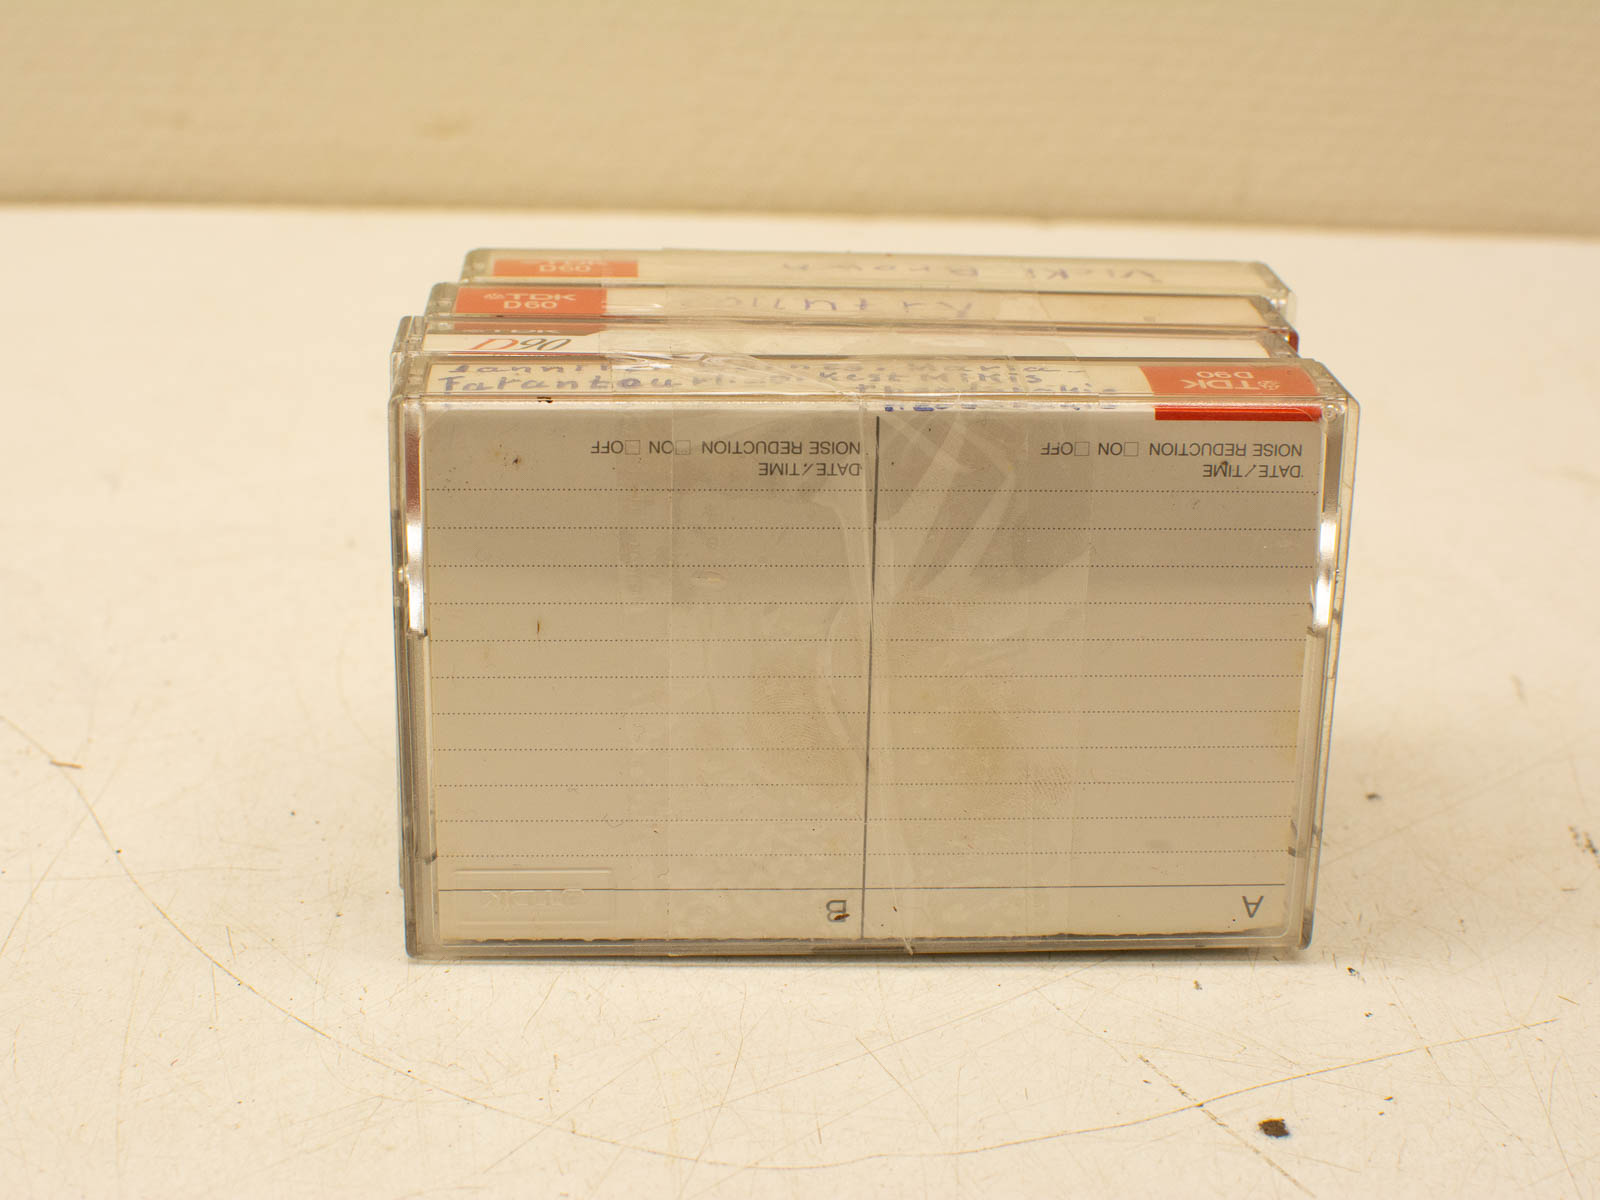 4 TDK cassettebandjes 30359